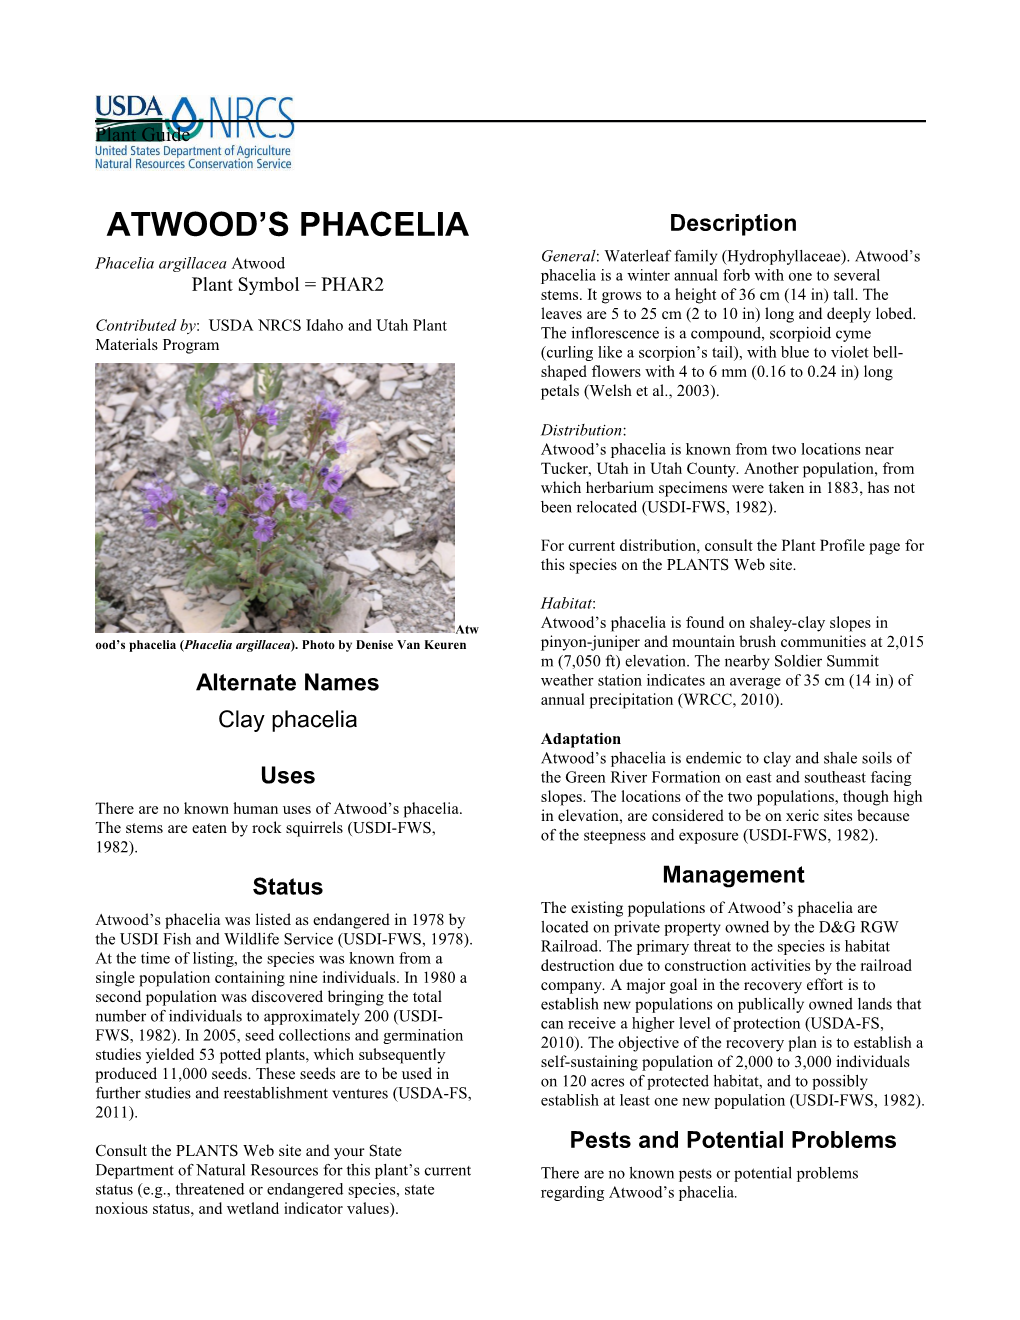 Plant Guide for Atwood's Phacelia (Phacelia Argillacea)